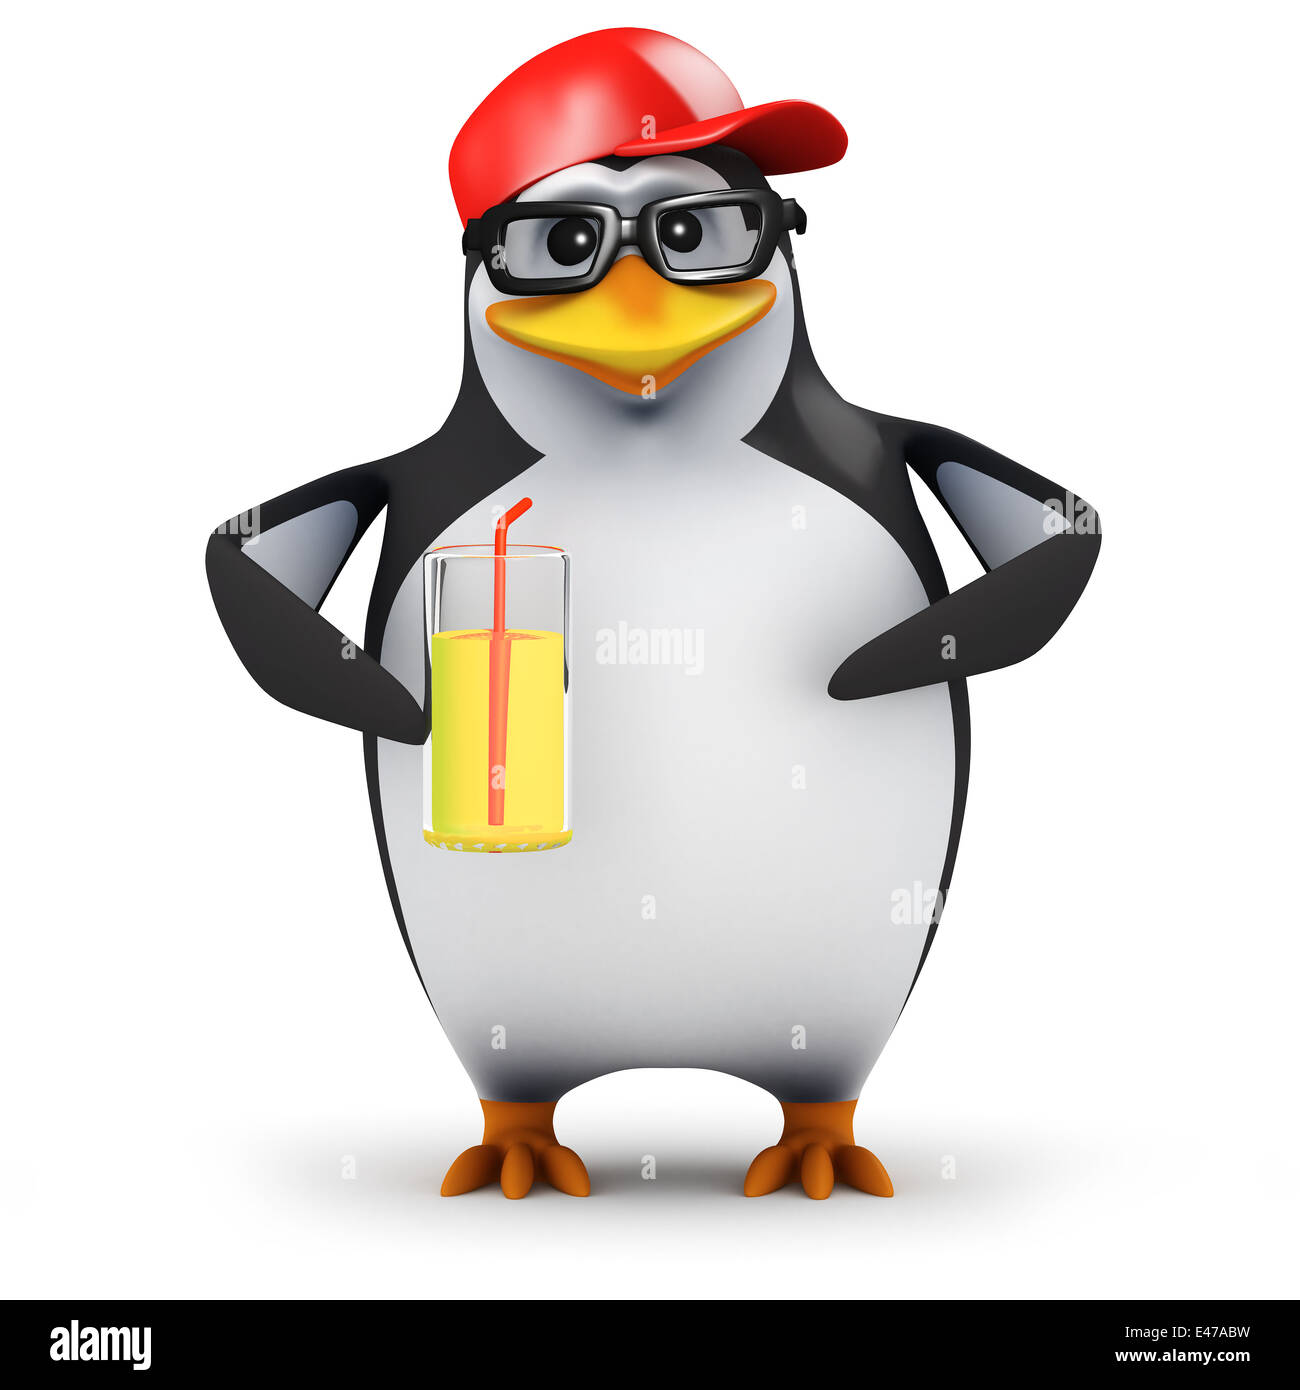 https://c8.alamy.com/comp/E47ABW/3d-academic-penguin-drinks-a-nice-fruit-juice-through-a-straw-E47ABW.jpg